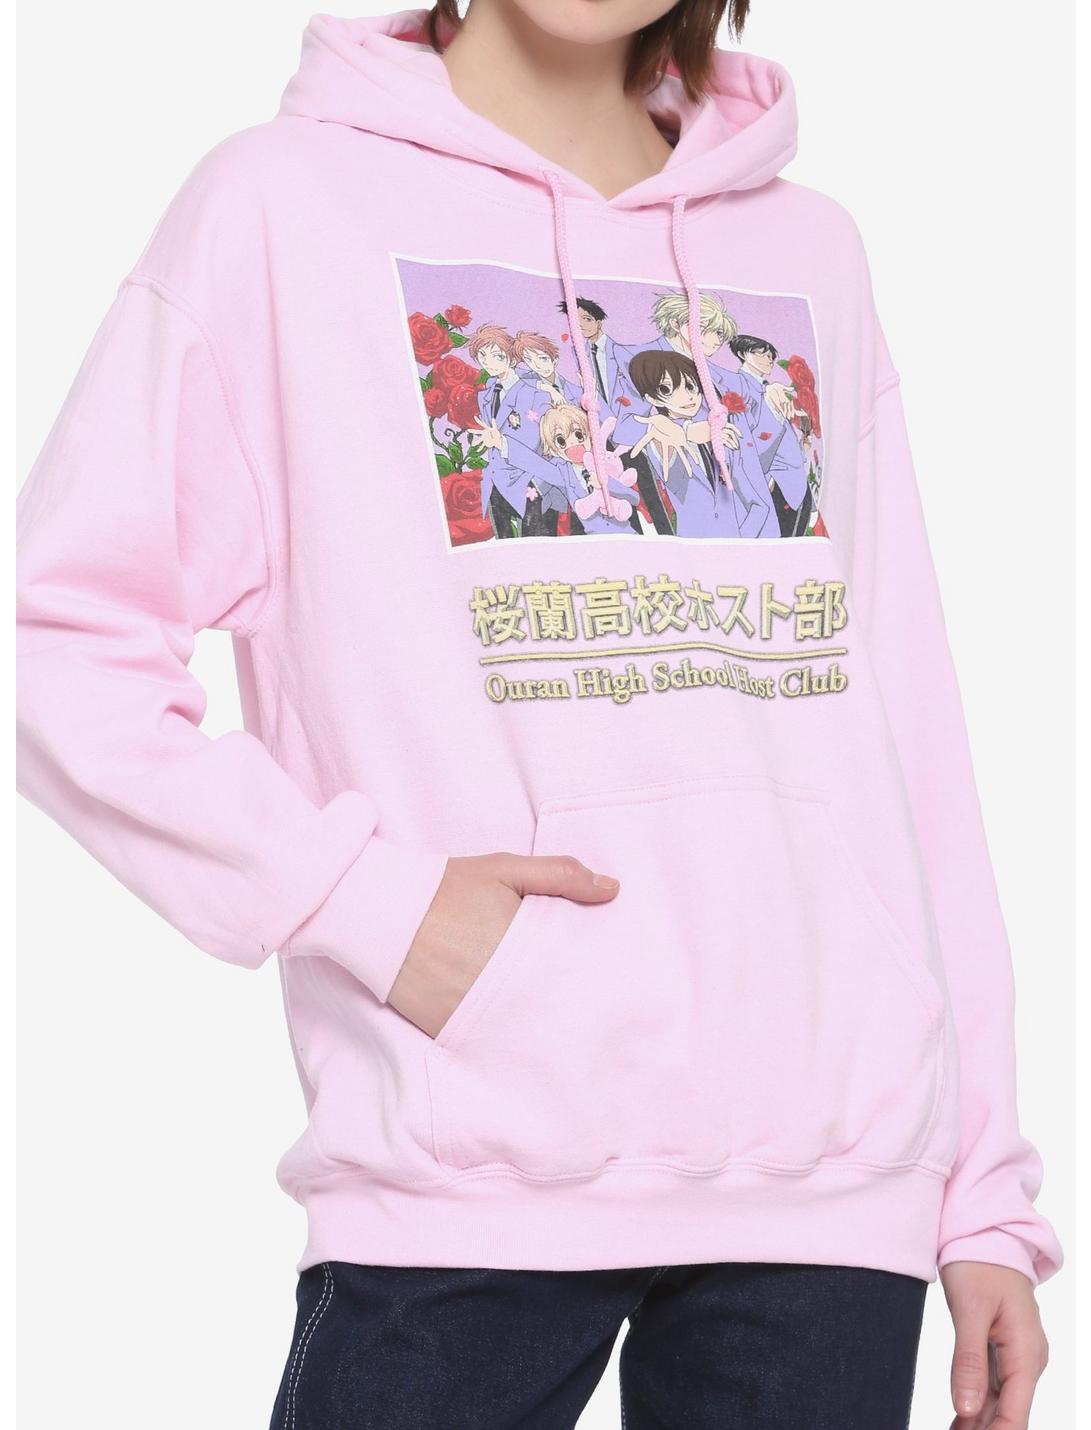 Ouran High School Host Club Womens Anime Pullover Hoodie Sweatshirt Tops